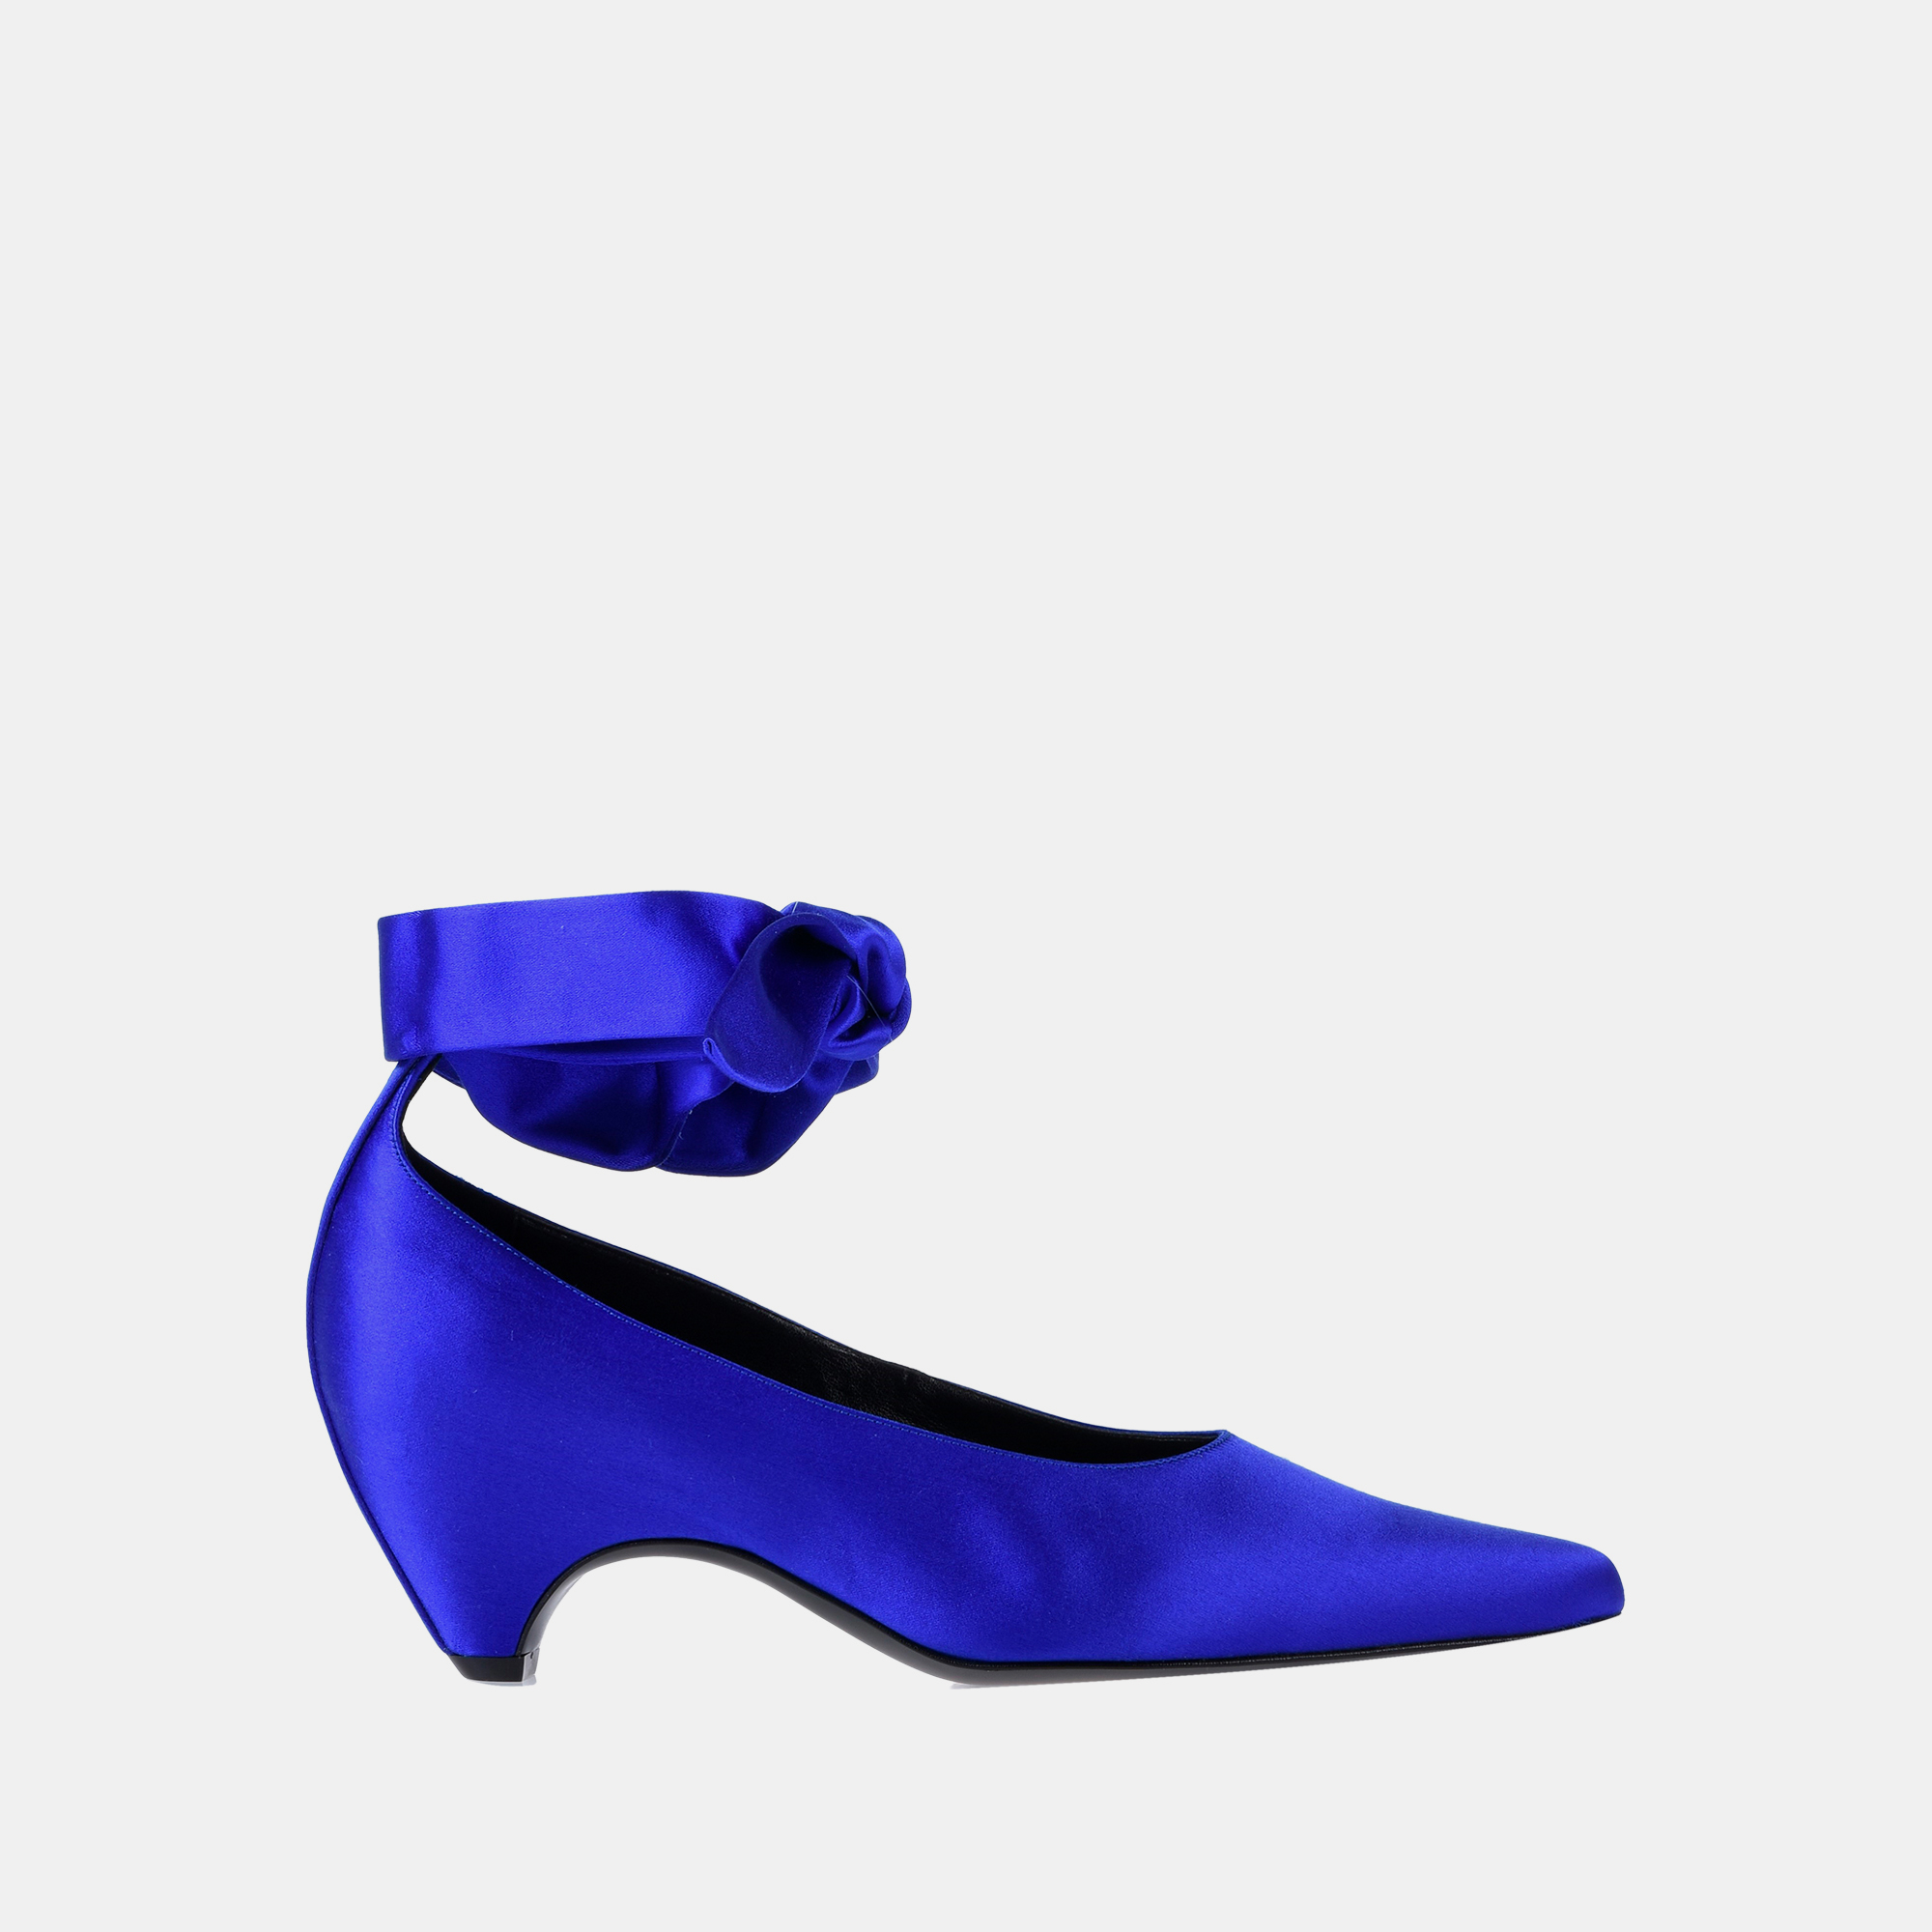 Stella mccartney blue satin ankle strap pumps size 37.5